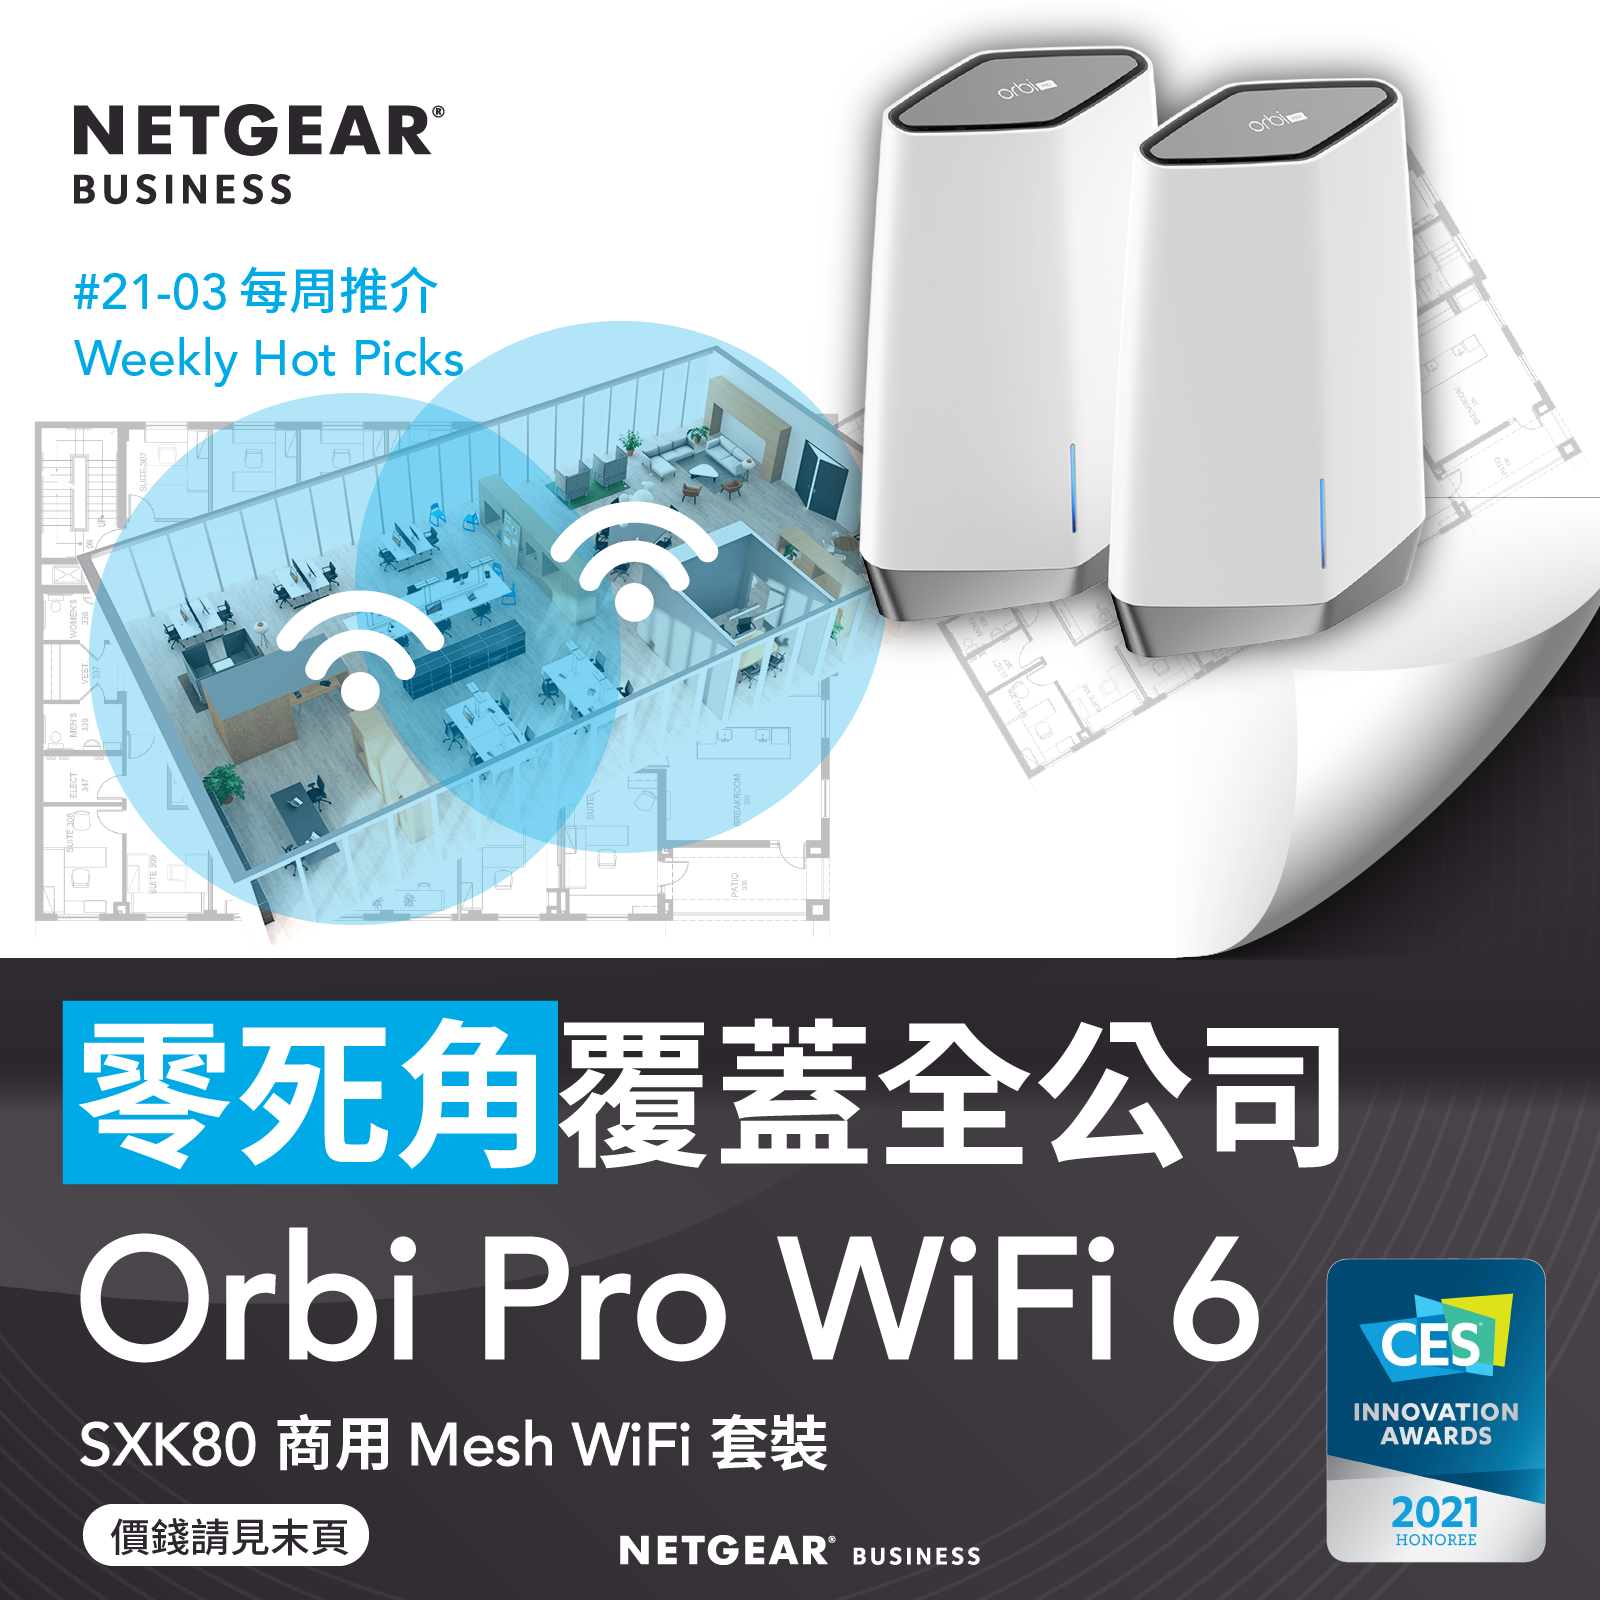 Issue 21-03零死角覆蓋全公司- Orbi Pro WiFi 6 (SXK80) 商用Mesh WiFi